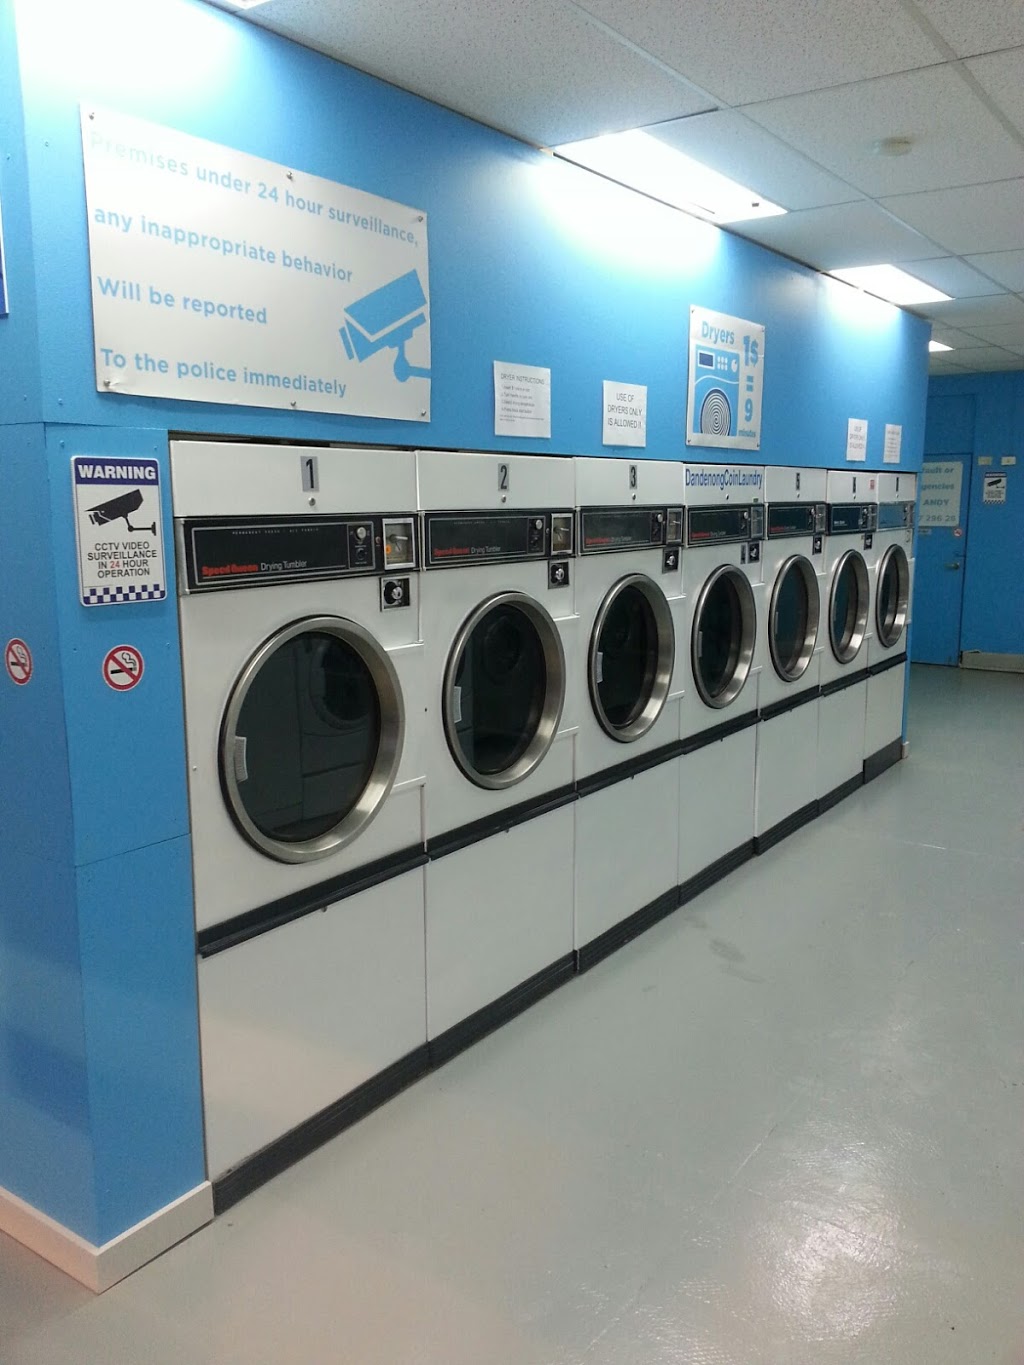 Dandenong Coin Laundry | laundry | 4 Ingrid St, Dandenong VIC 3175, Australia | 0478771620 OR +61 478 771 620